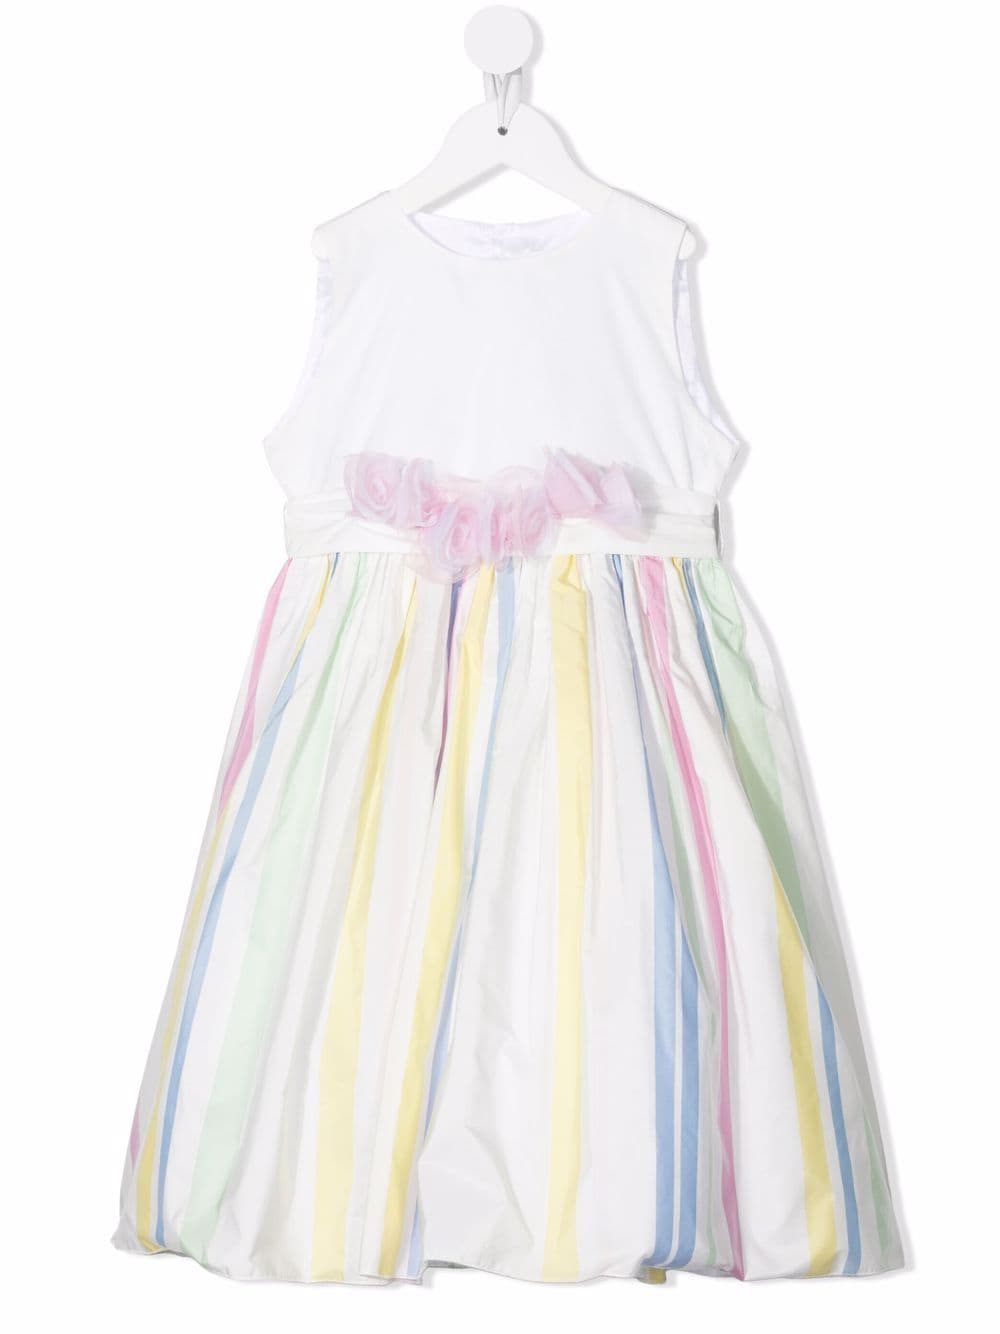 mariella ferrari rainbow striped dress - white